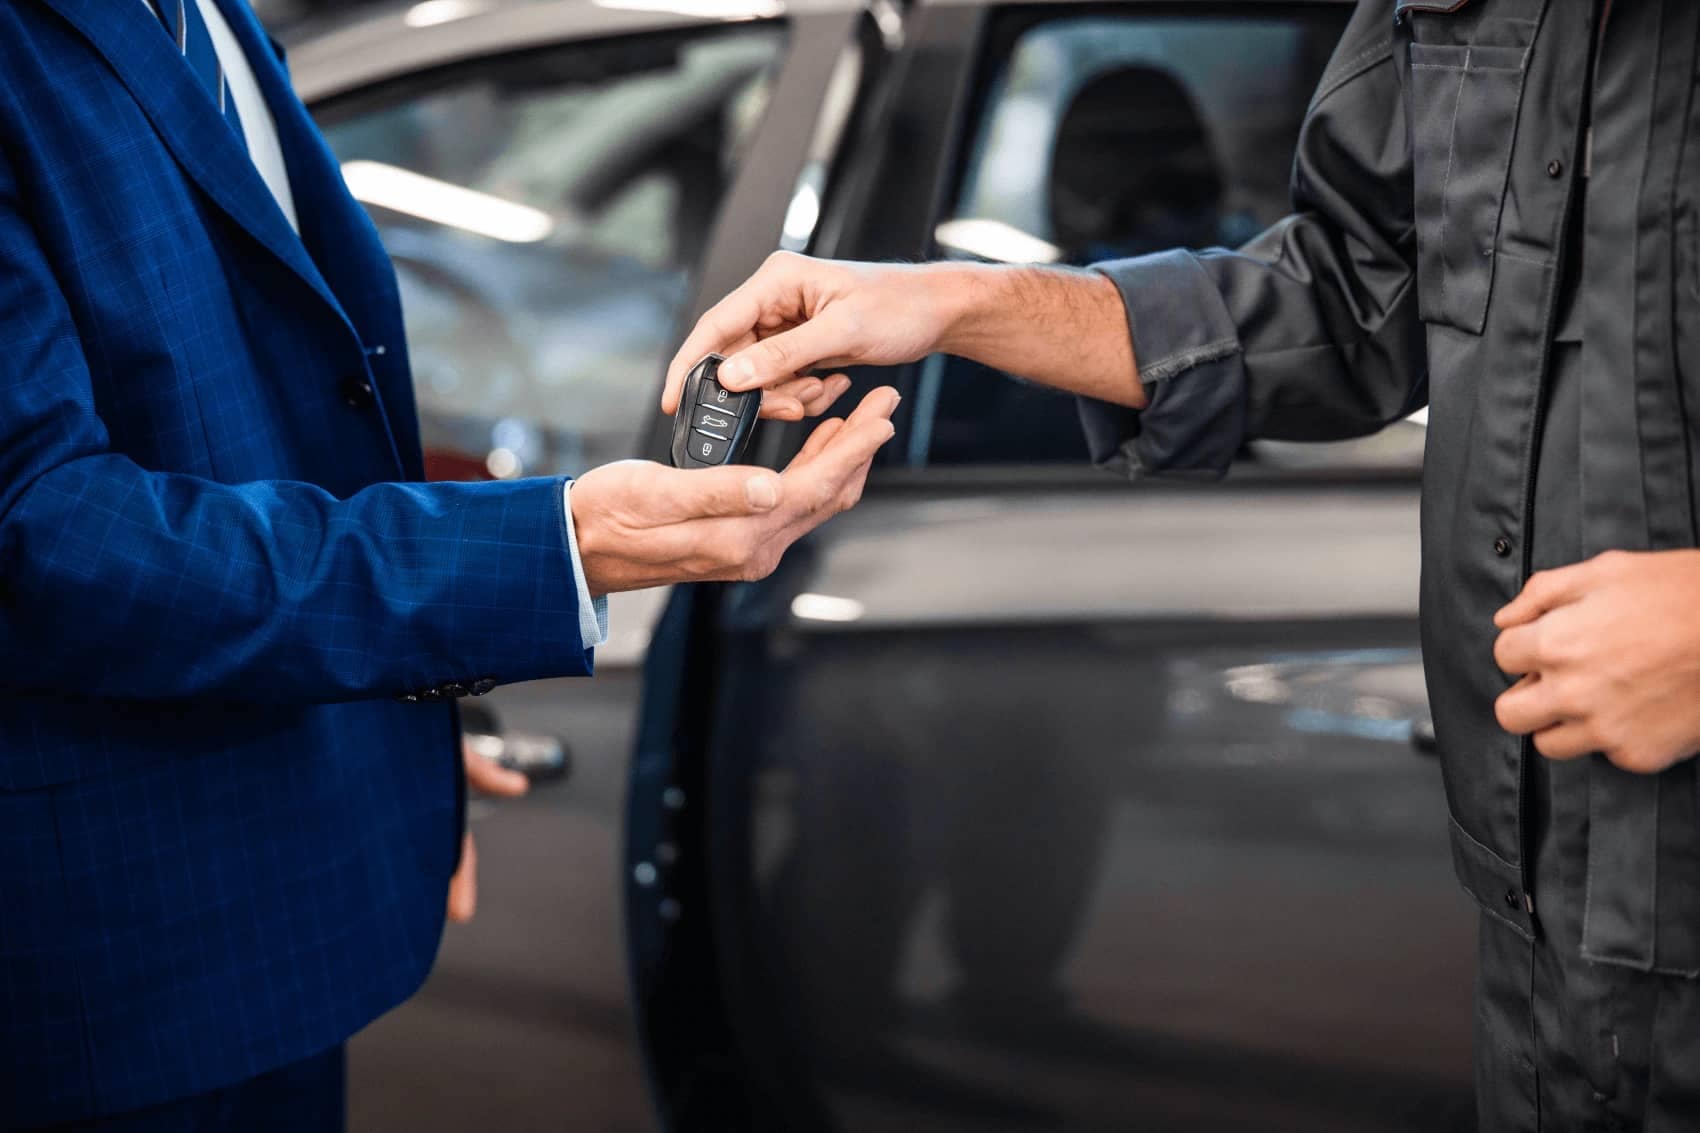 Handing over keys of a vehicle